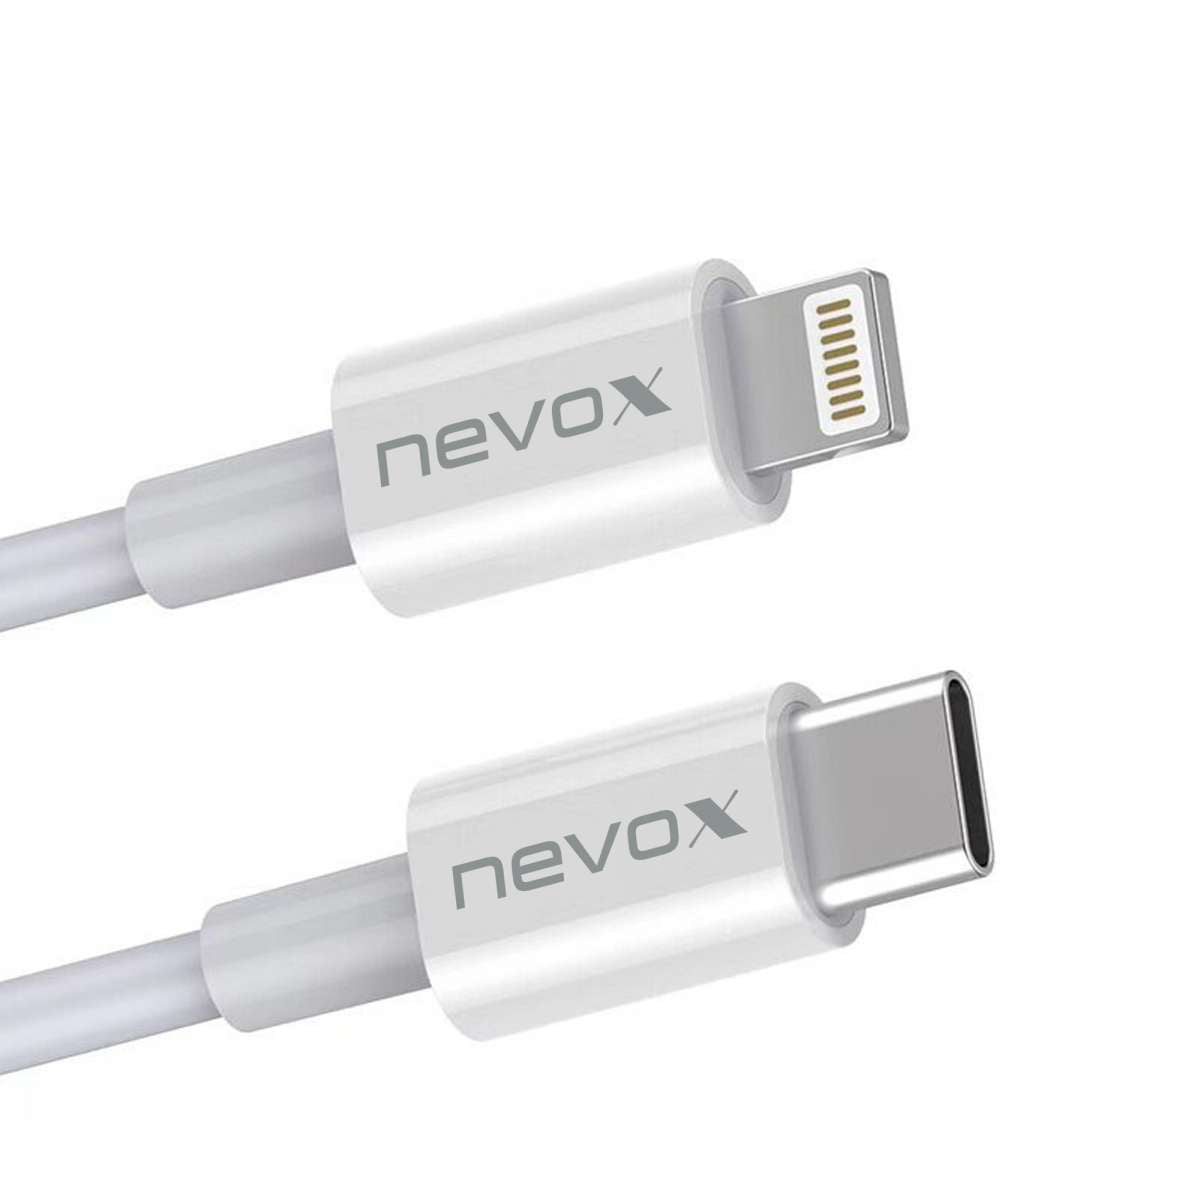 Nevox 1M - LIGHTNING TO TYPE C USB DATA Cable MFI, White